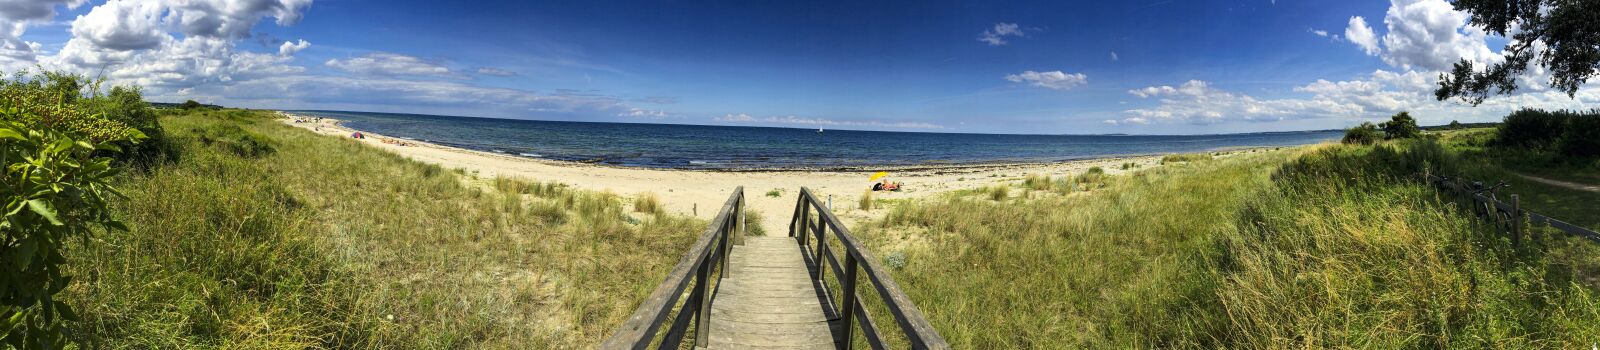 Apple iPhone 6 sample photo. Baltic sea, beach, nudist photography